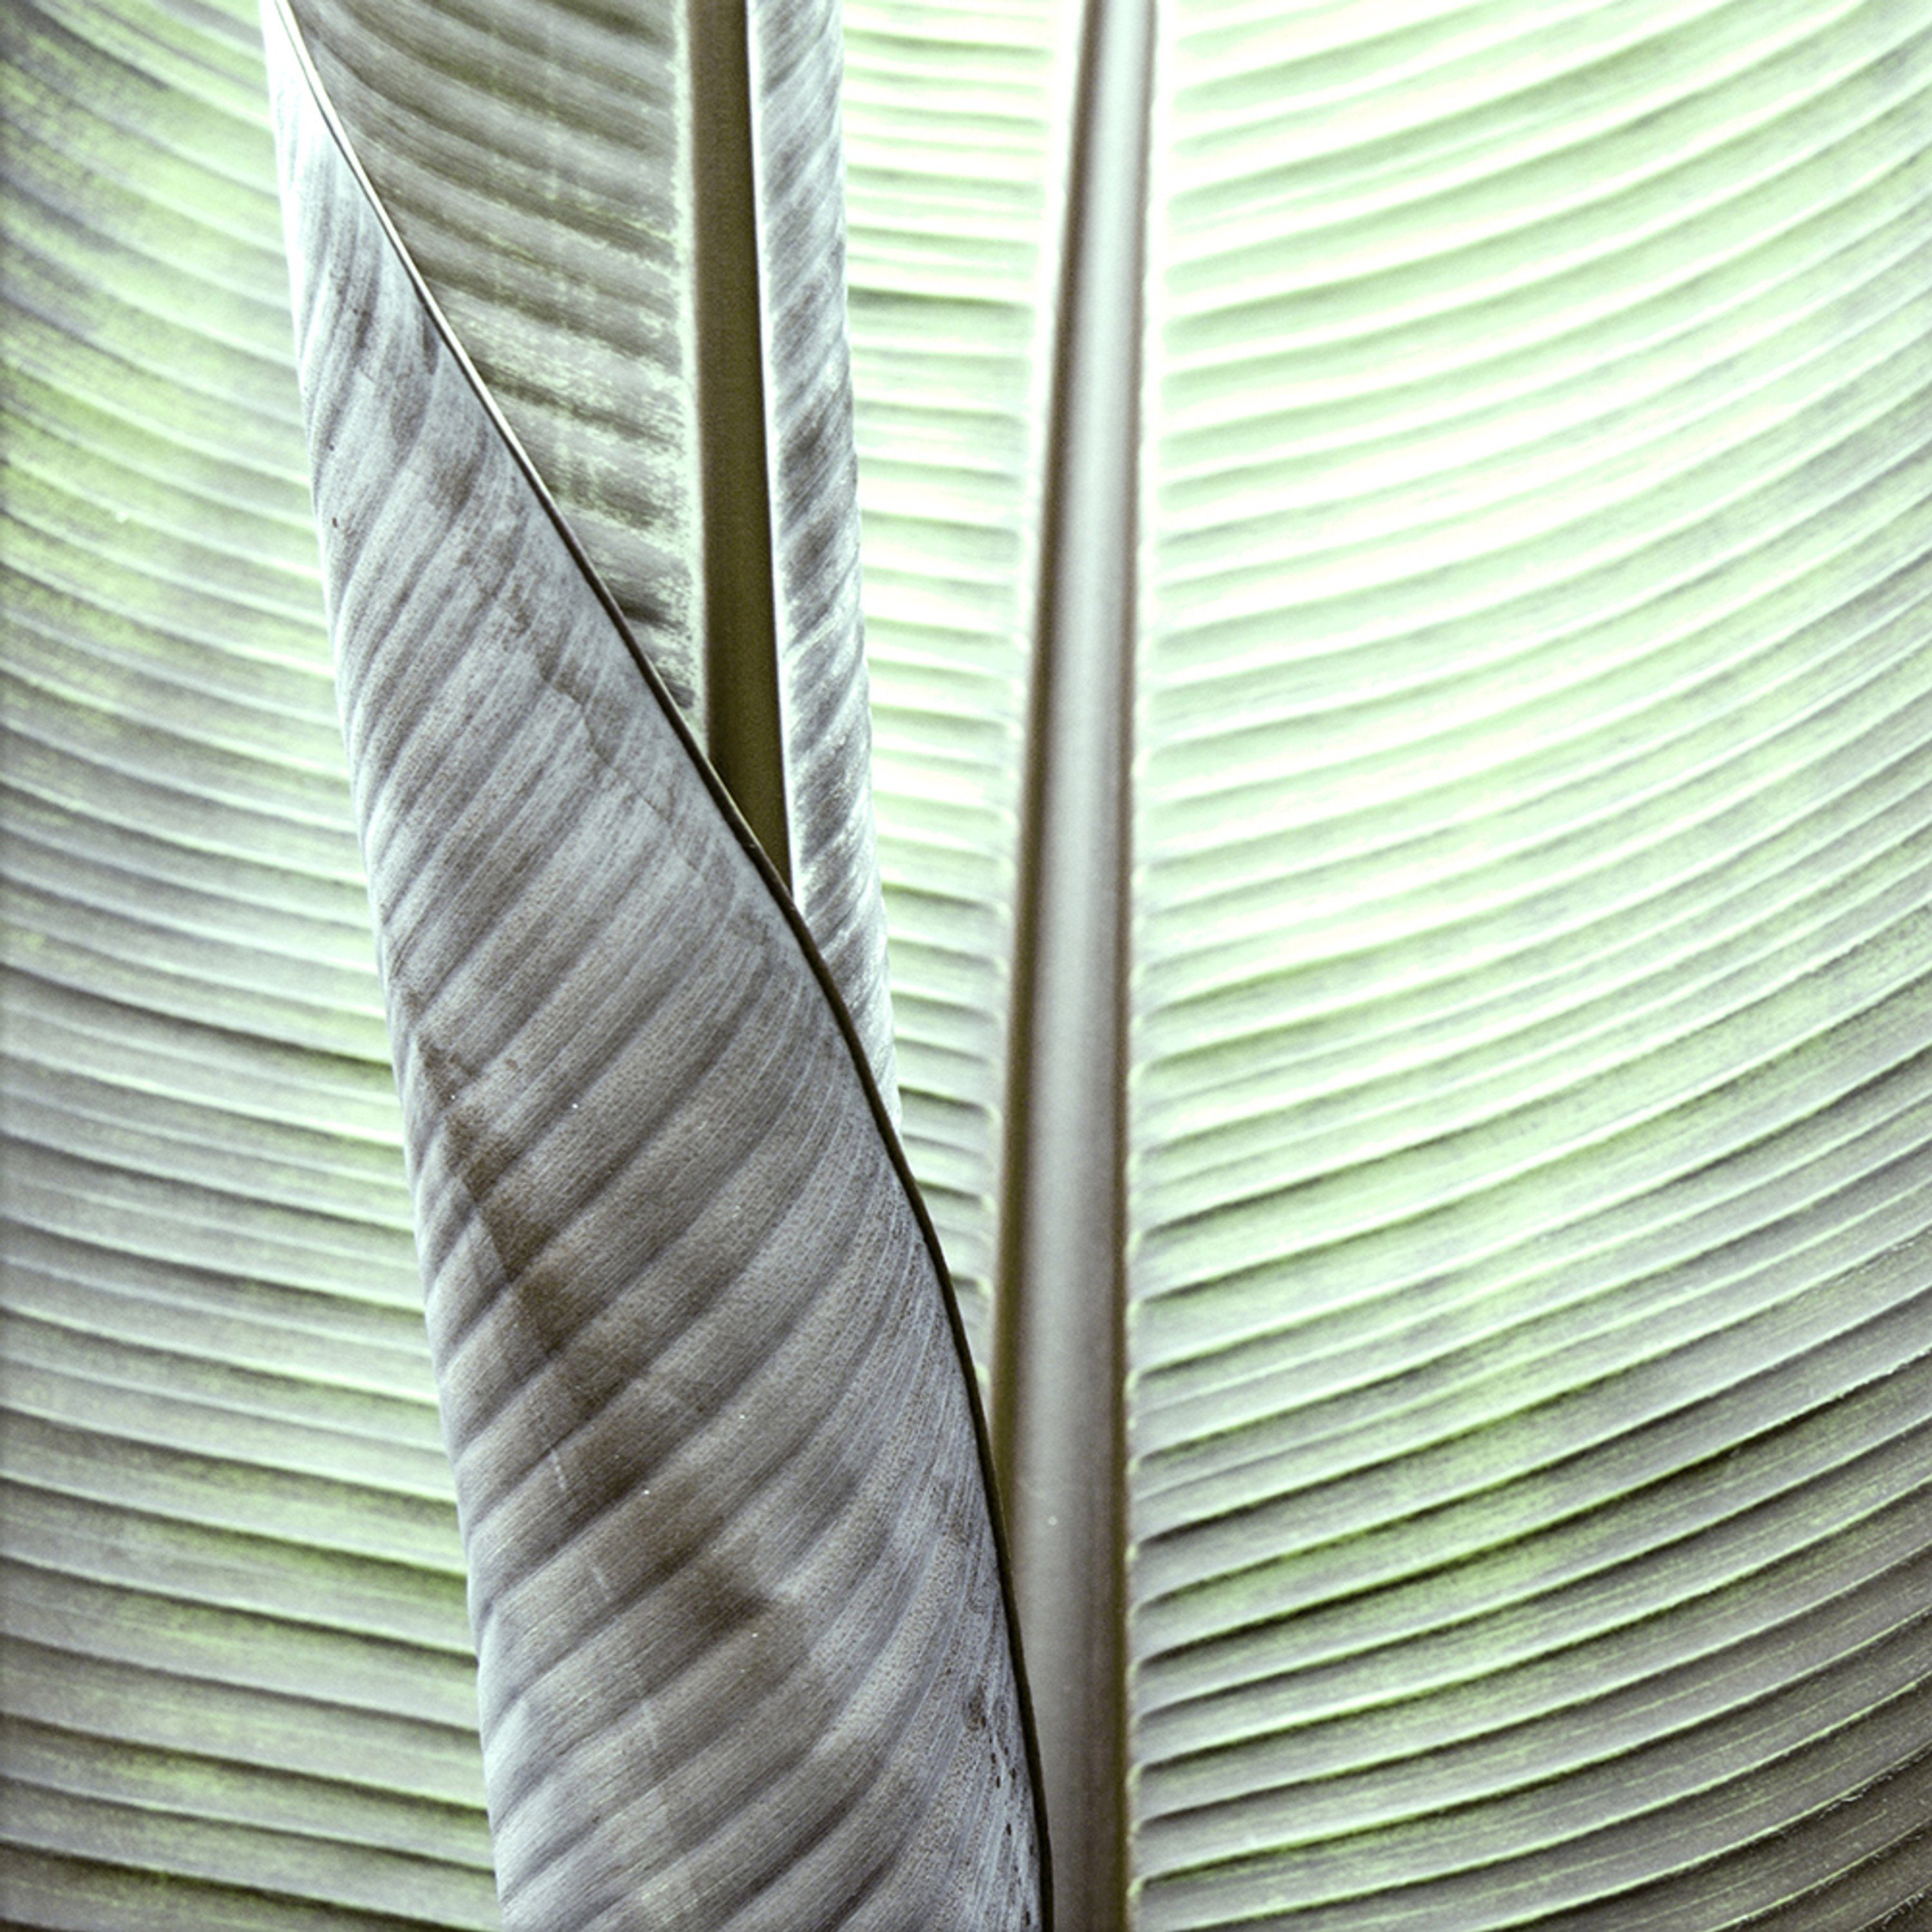 artissimo Glasbild Glasbild 30x30cm Bild Natur Blatt grün Tropical, Natur: Grünes Blatt